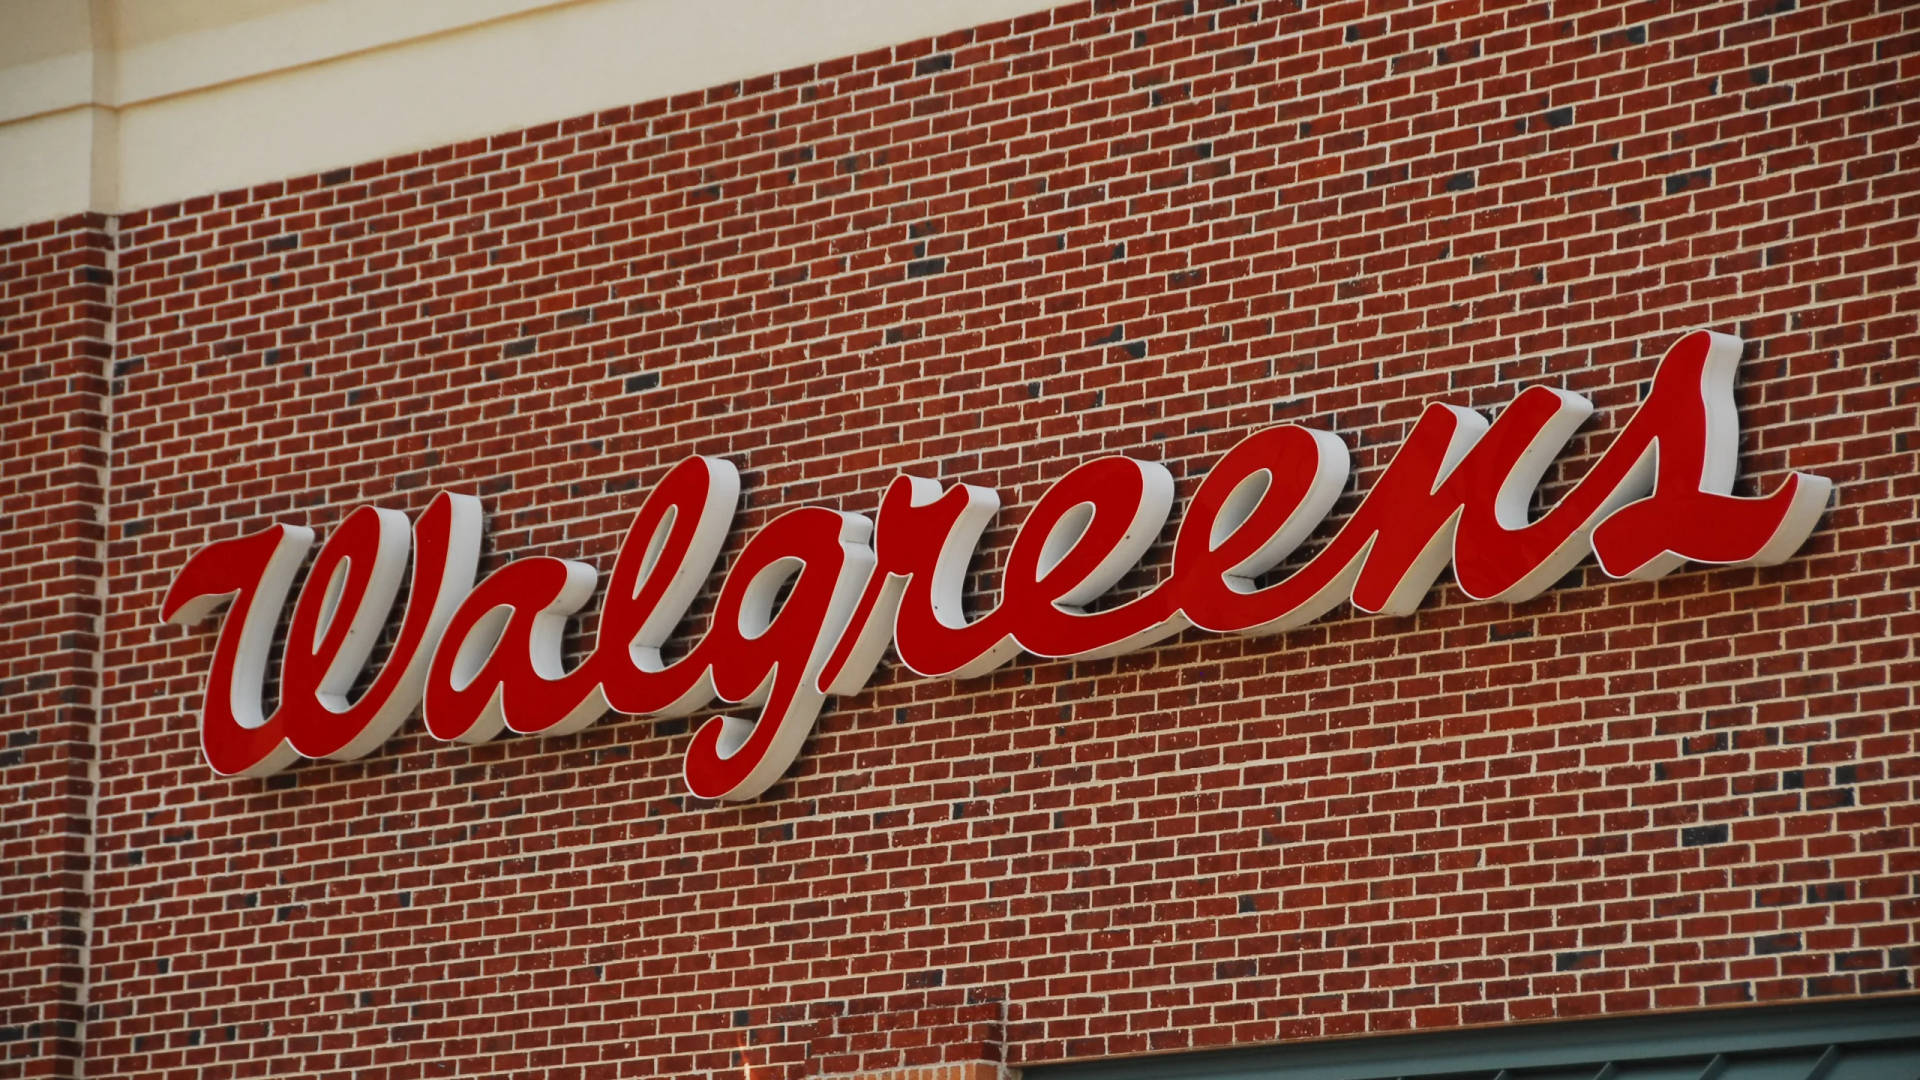 Walgreens Signage Brick Wall Picture